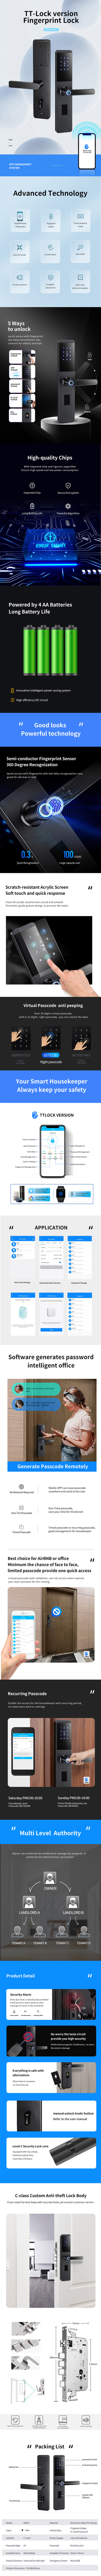 Smartek E902F 6068 Keyless Entry Fingerprint Password RFID Card Key Lock App Digital Biometric TTlock Smart Door Lock